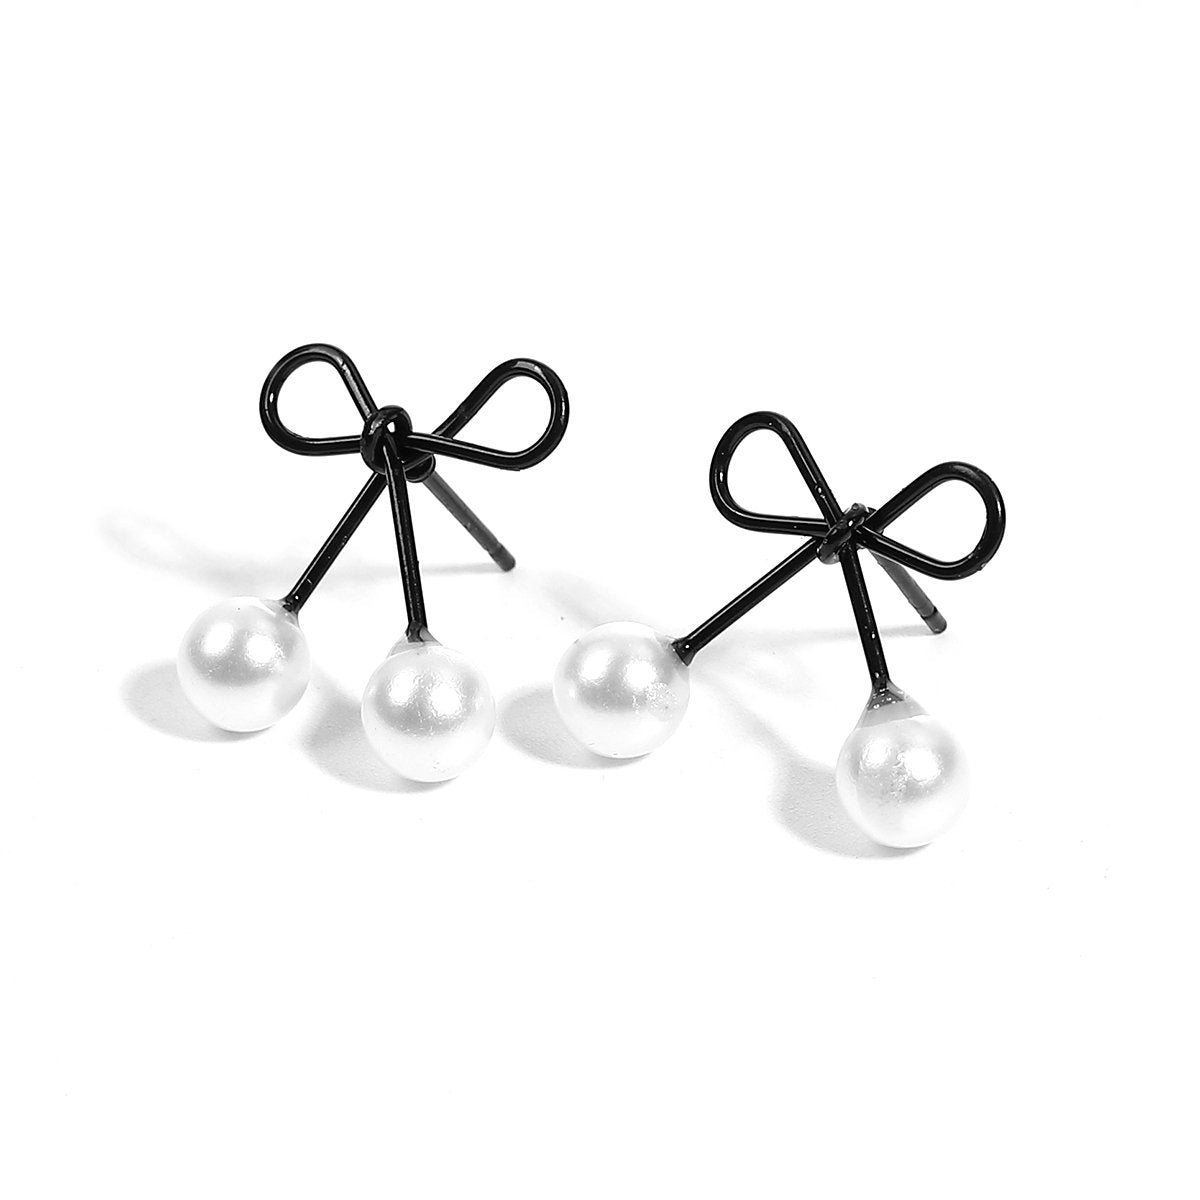 Black Bowtie Earrings - My Custom Tee Party